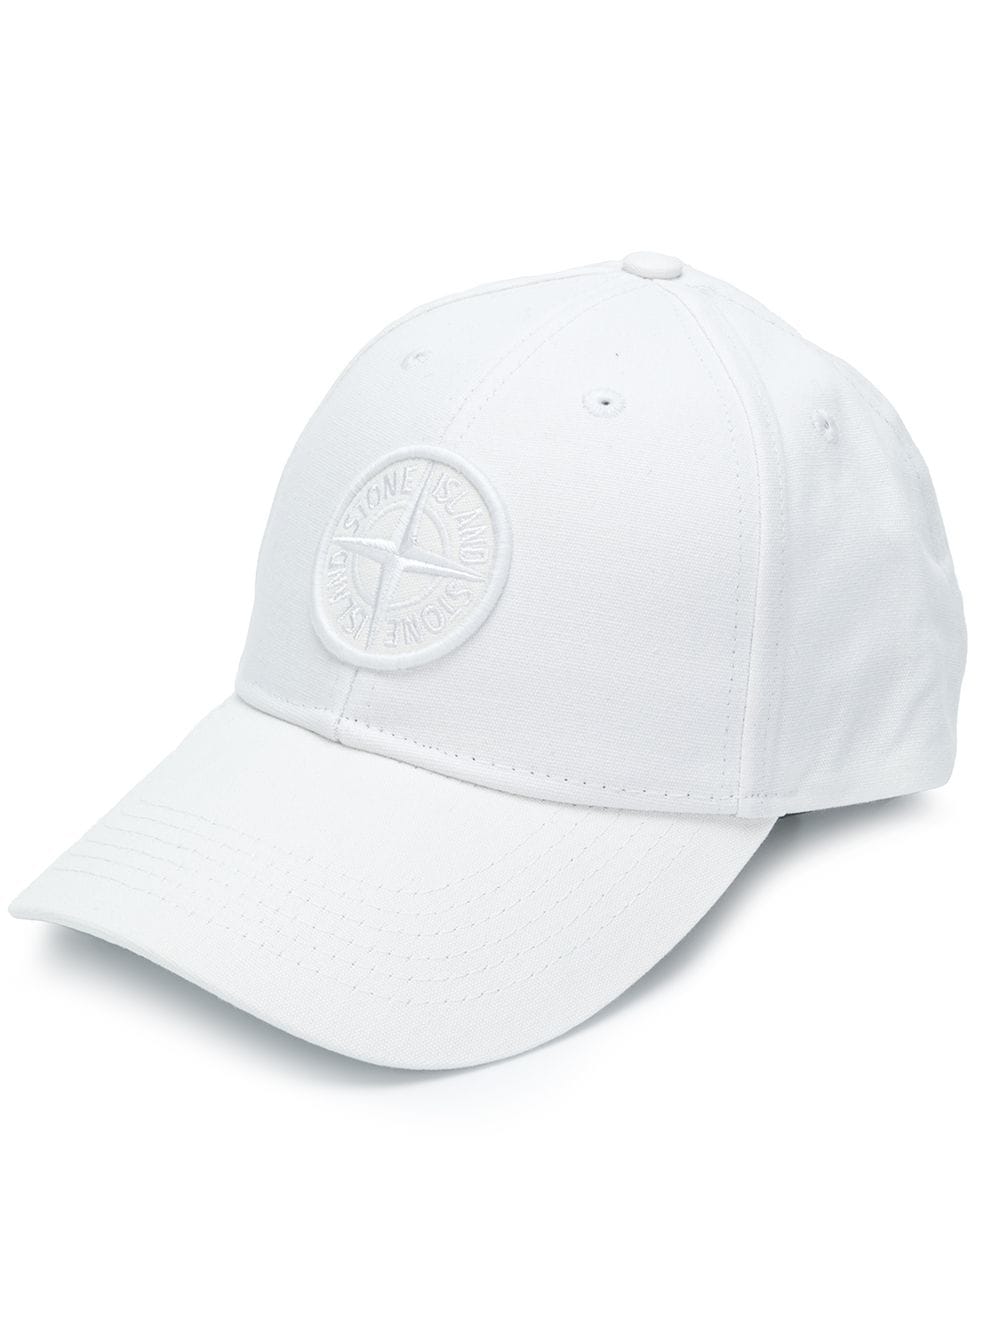 White Cap Construction Logo - Stone Island Compass Logo Baseball Cap In White